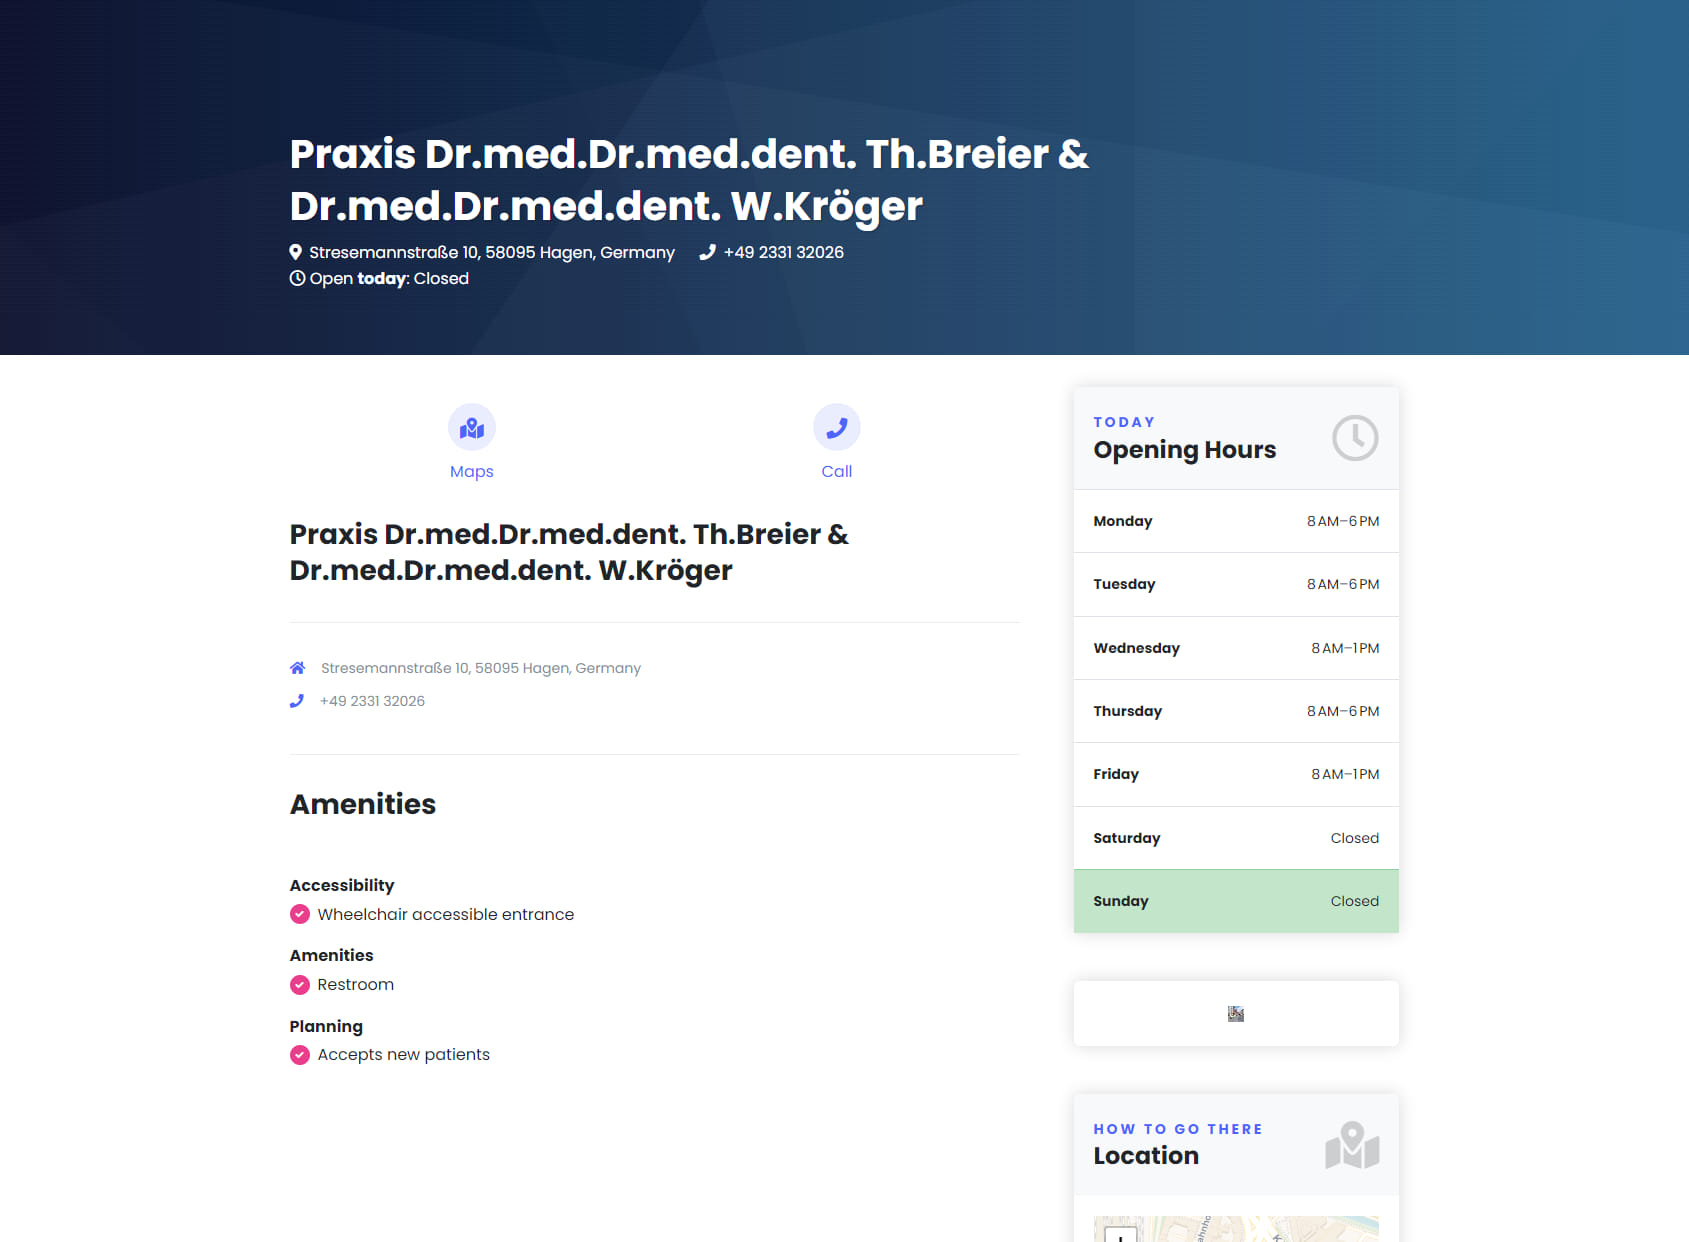 Praxis Dr.med.Dr.med.dent. Th.Breier & Dr.med.Dr.med.dent. W.Kröger